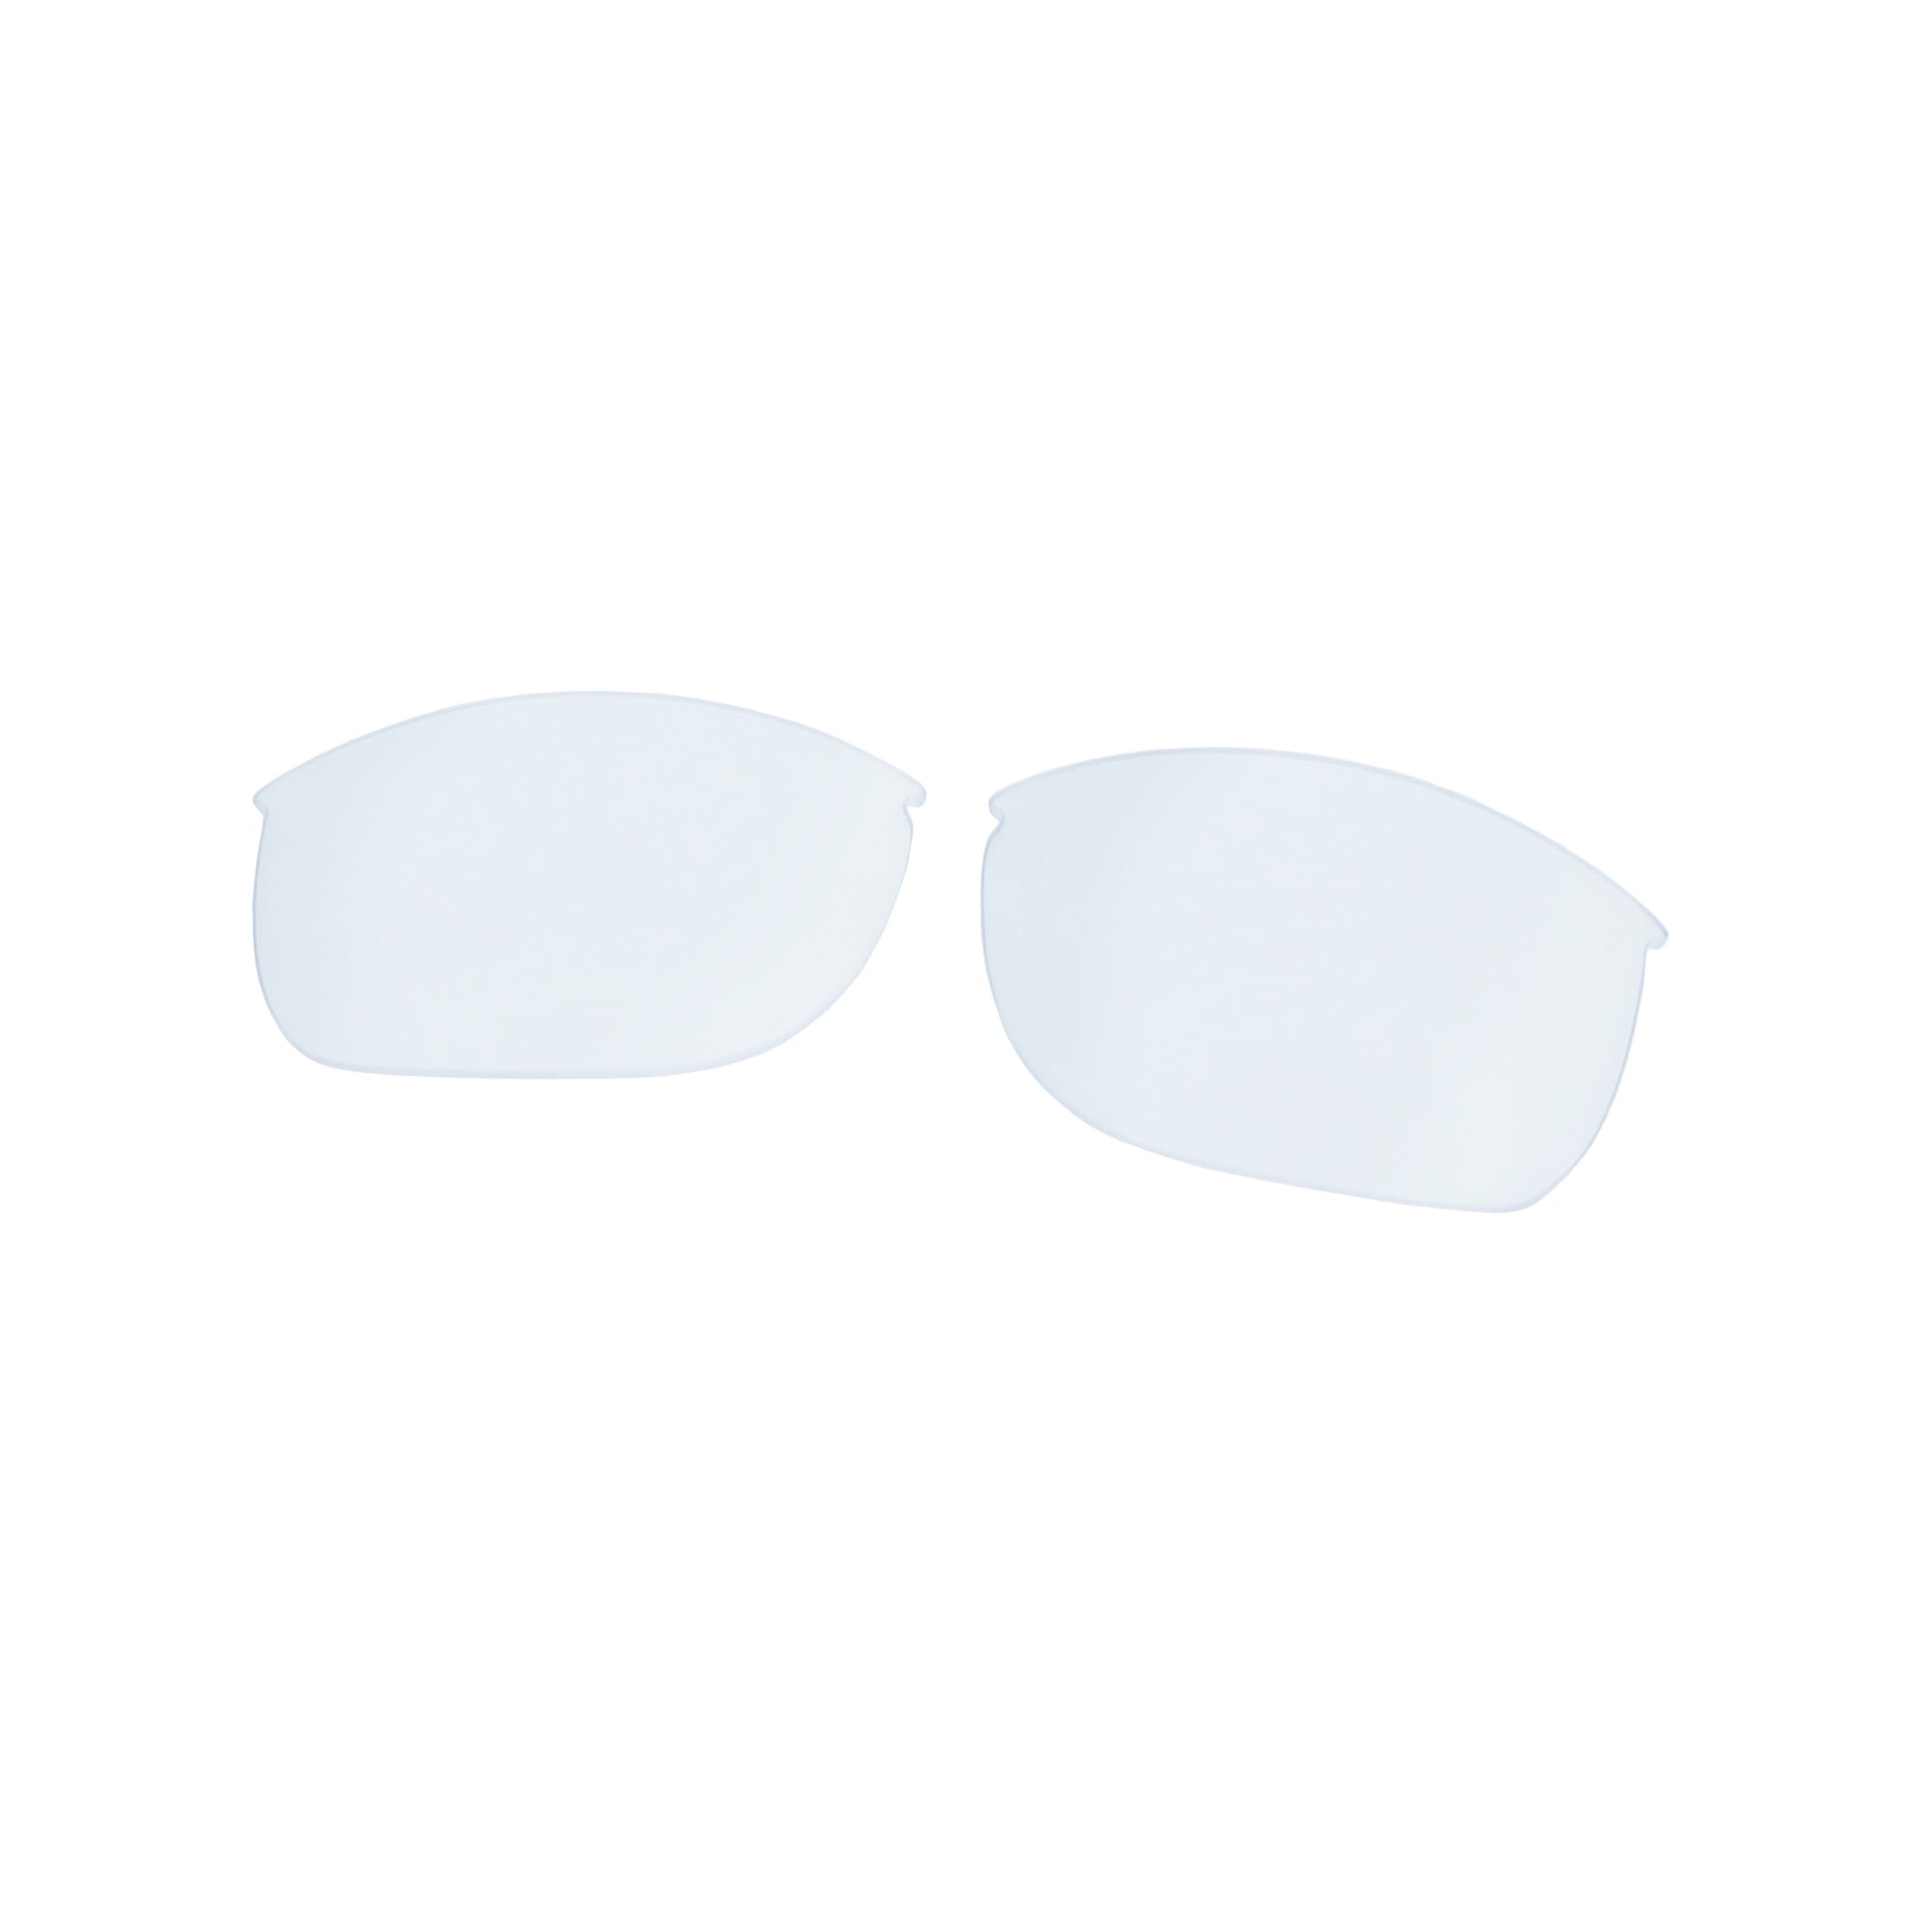 Moxie Lenses B8 - Sunglass Accessories|SLMOXL13